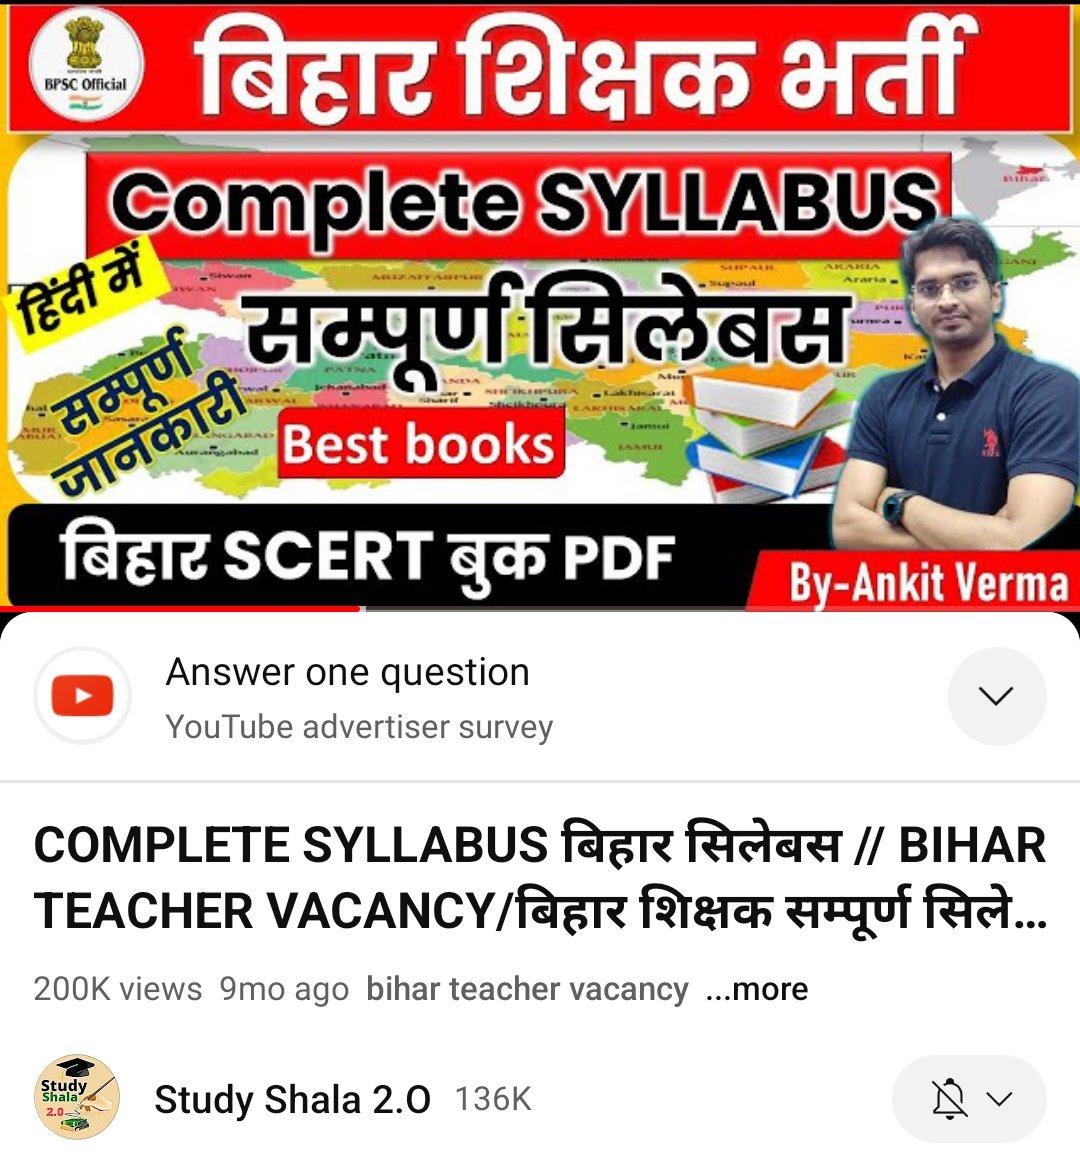 Bpsc_tre exam syllabus
#blsc #bpsctre #bosc_syllabus #npsc_news 
#bihar_special